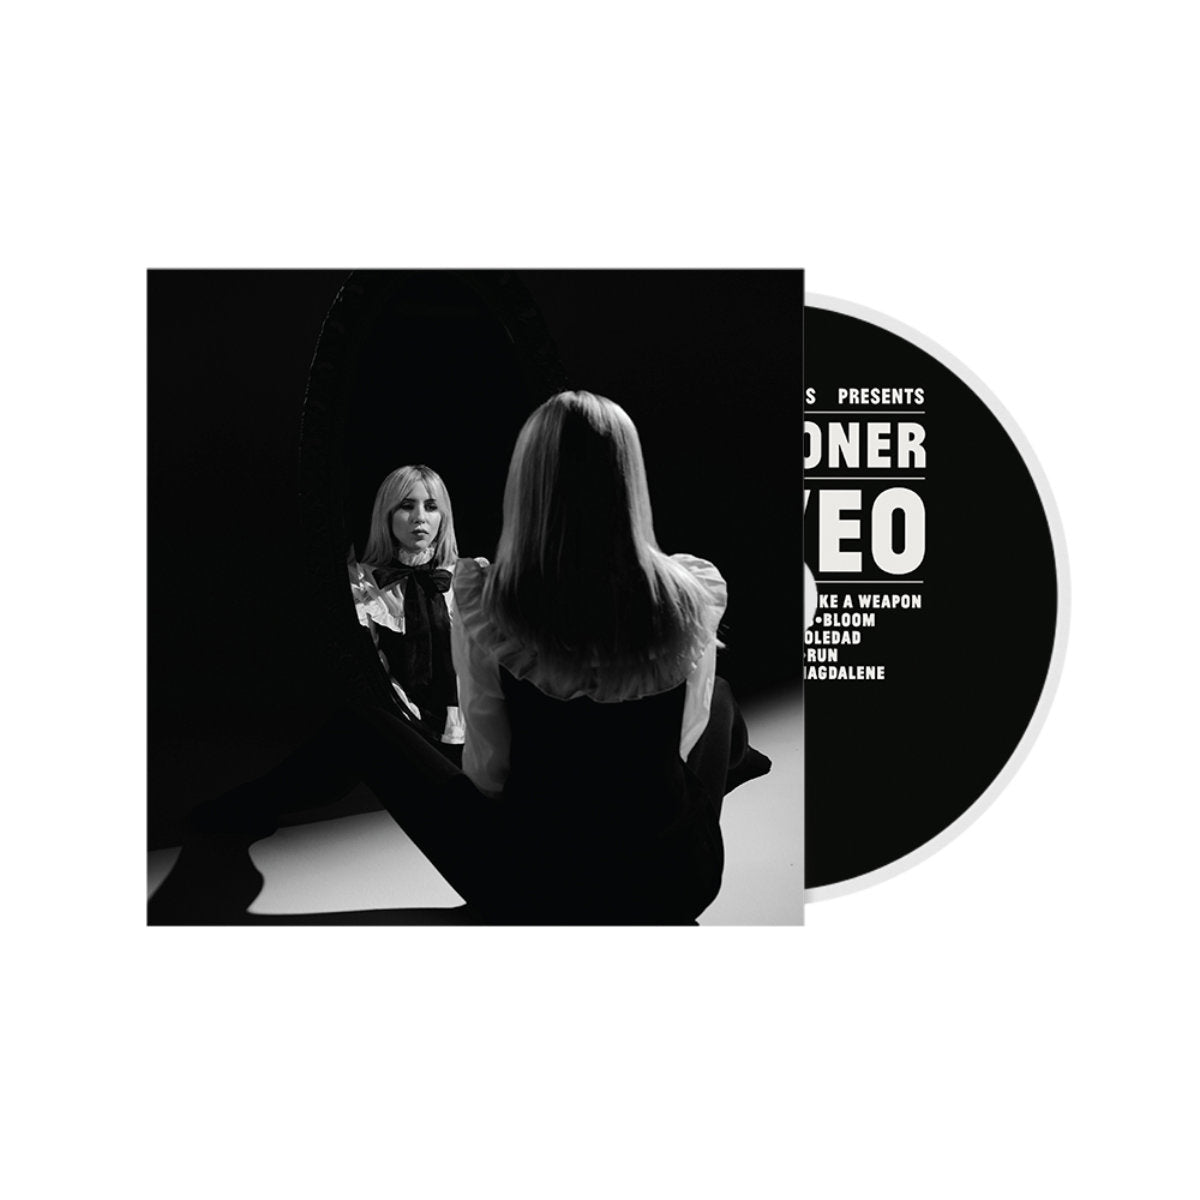 Brie Stoner - Me Veo: CD